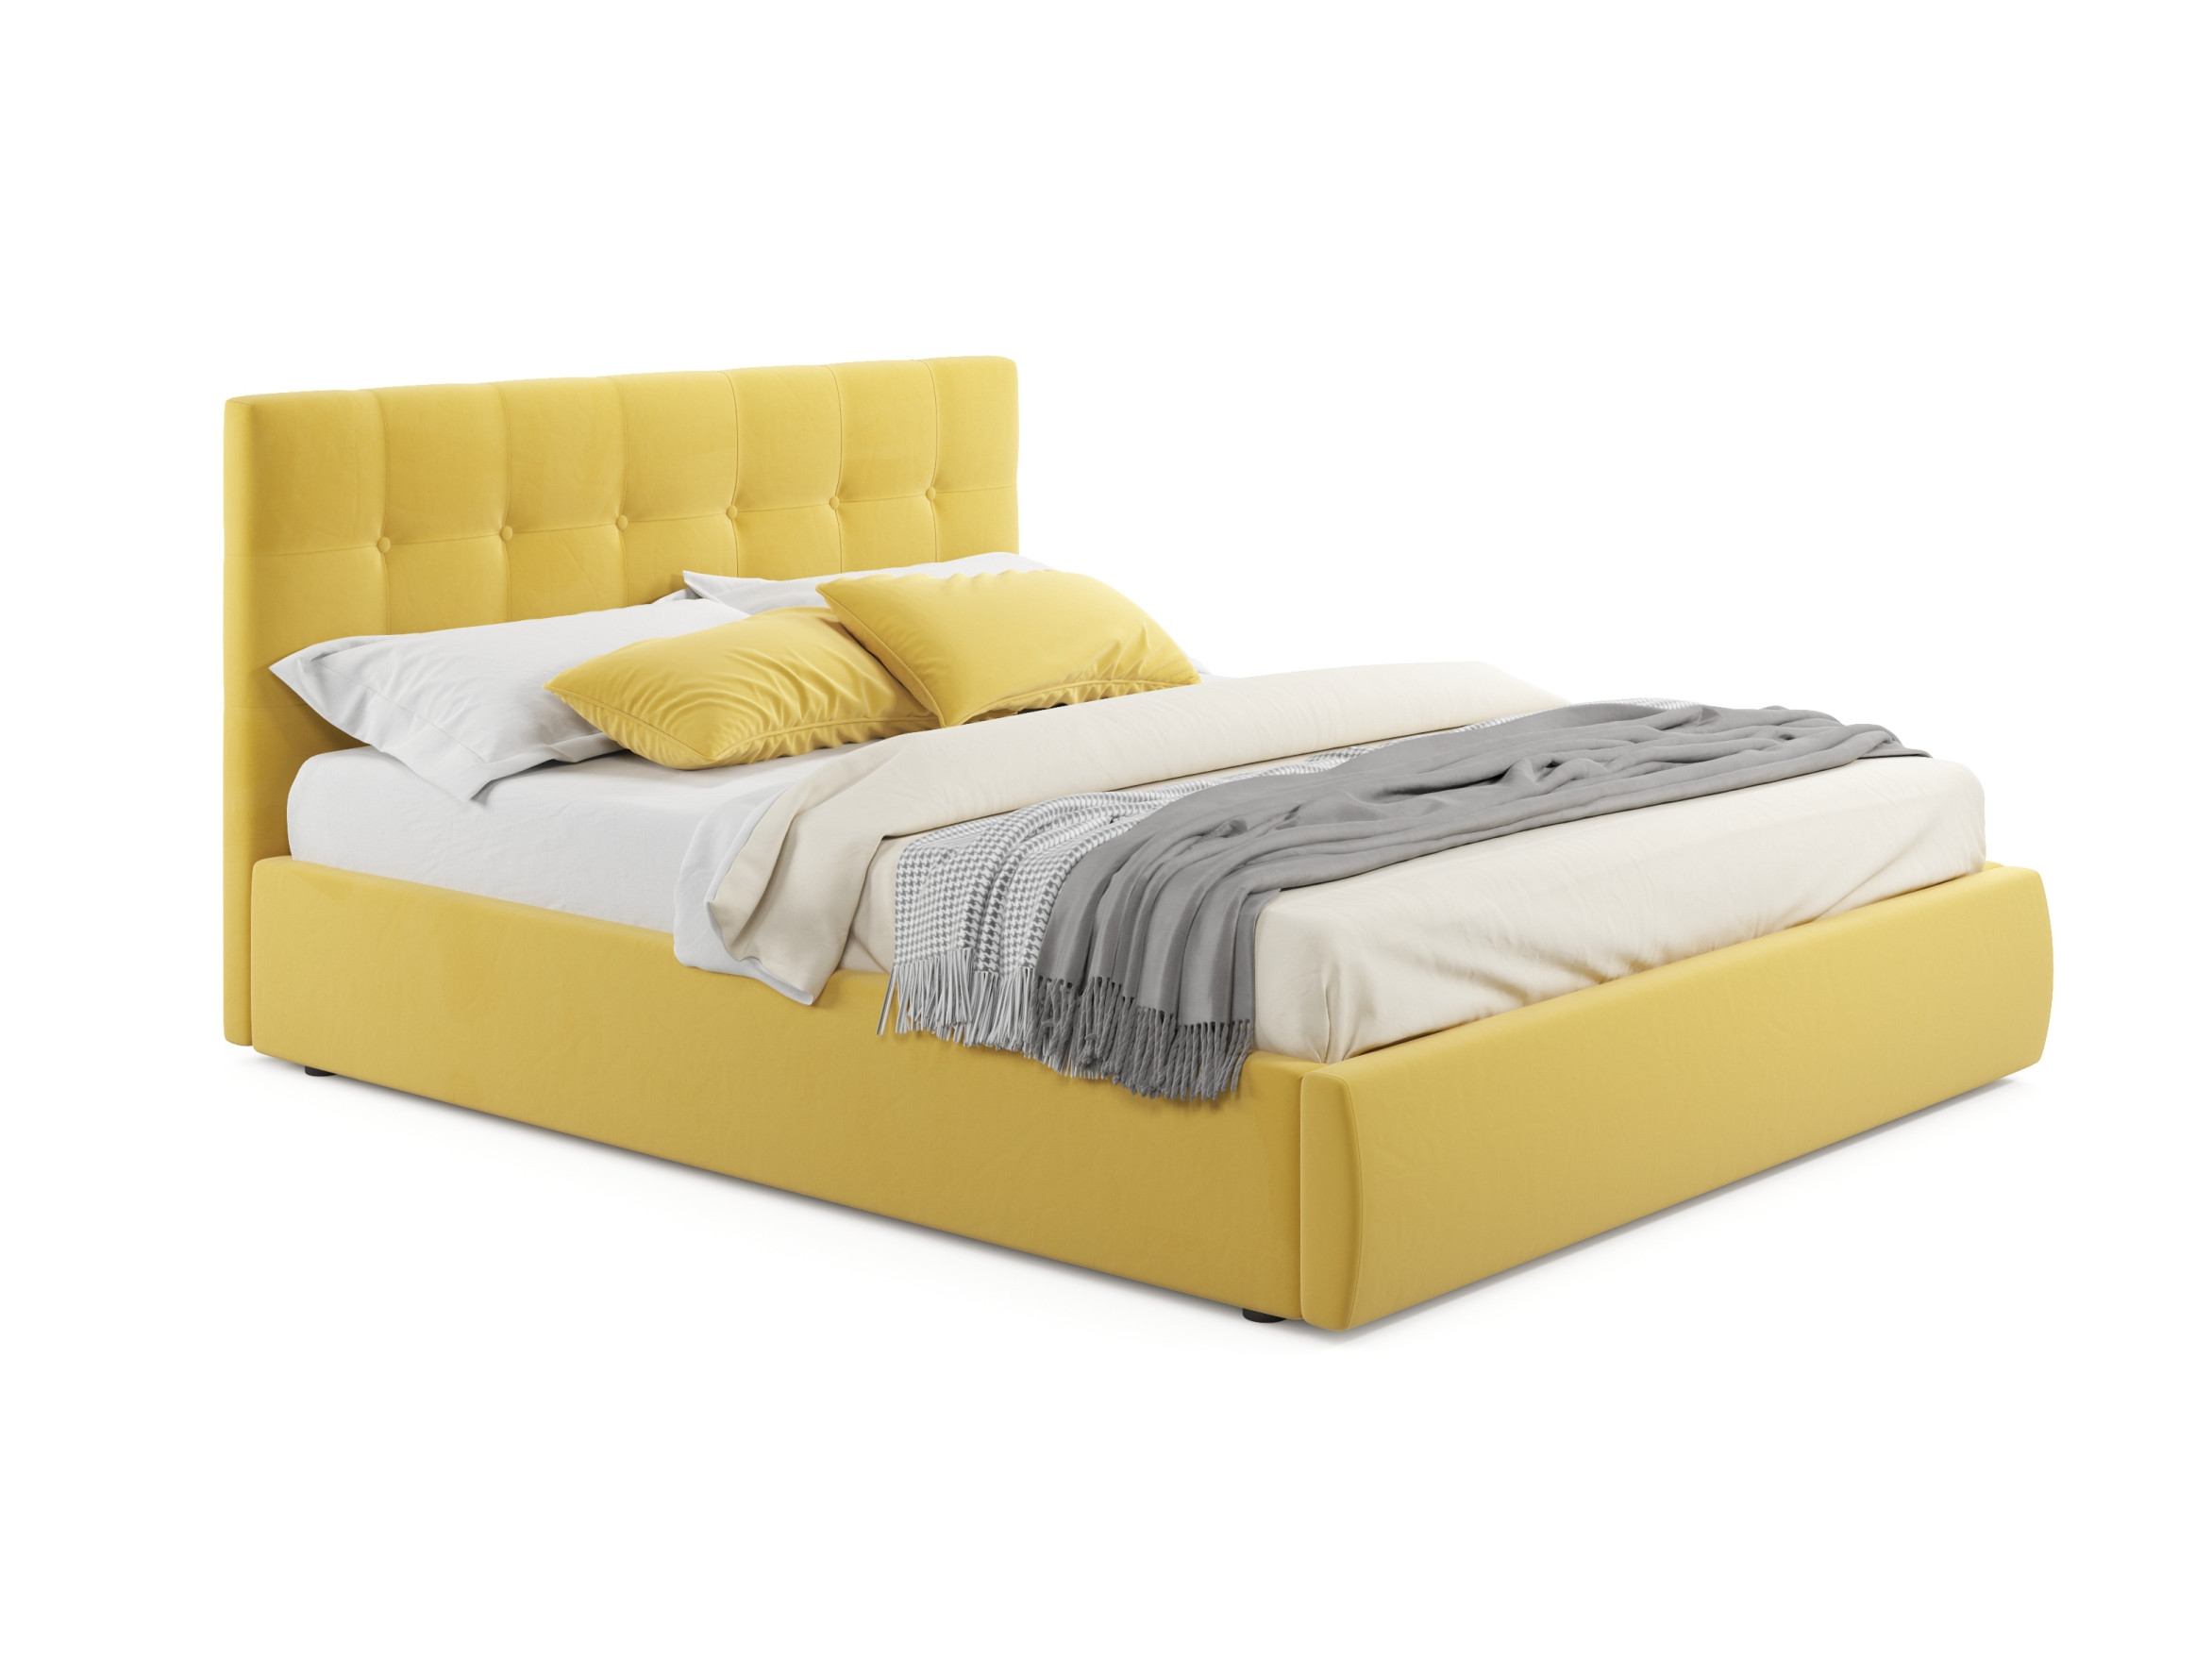 Комплект для сна Selesta 1800 желтый с подъемным механизмом желтый, Желтый, Велюр, ДСП